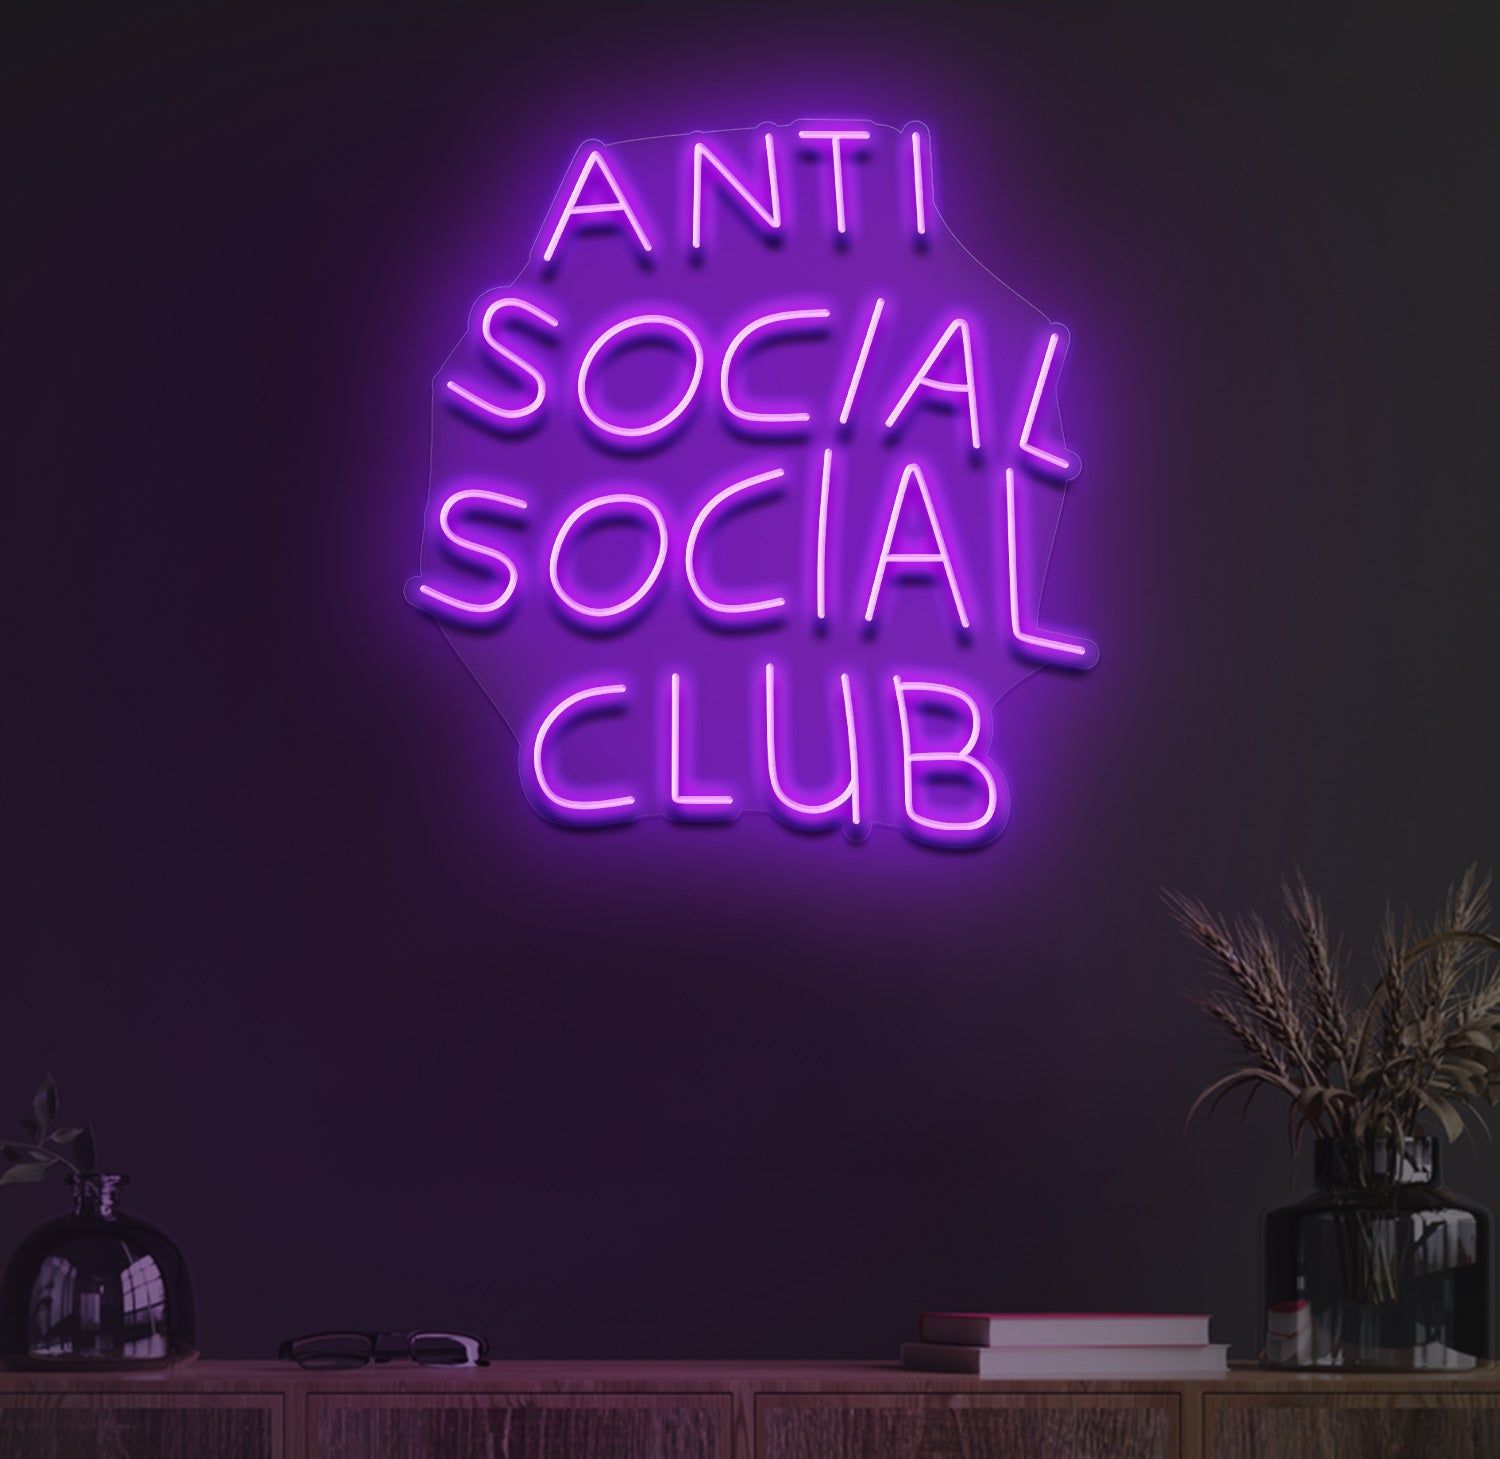 ANTI SOCIAL SOCIAL CLUB NEON SIGN. DesignNeon.Com